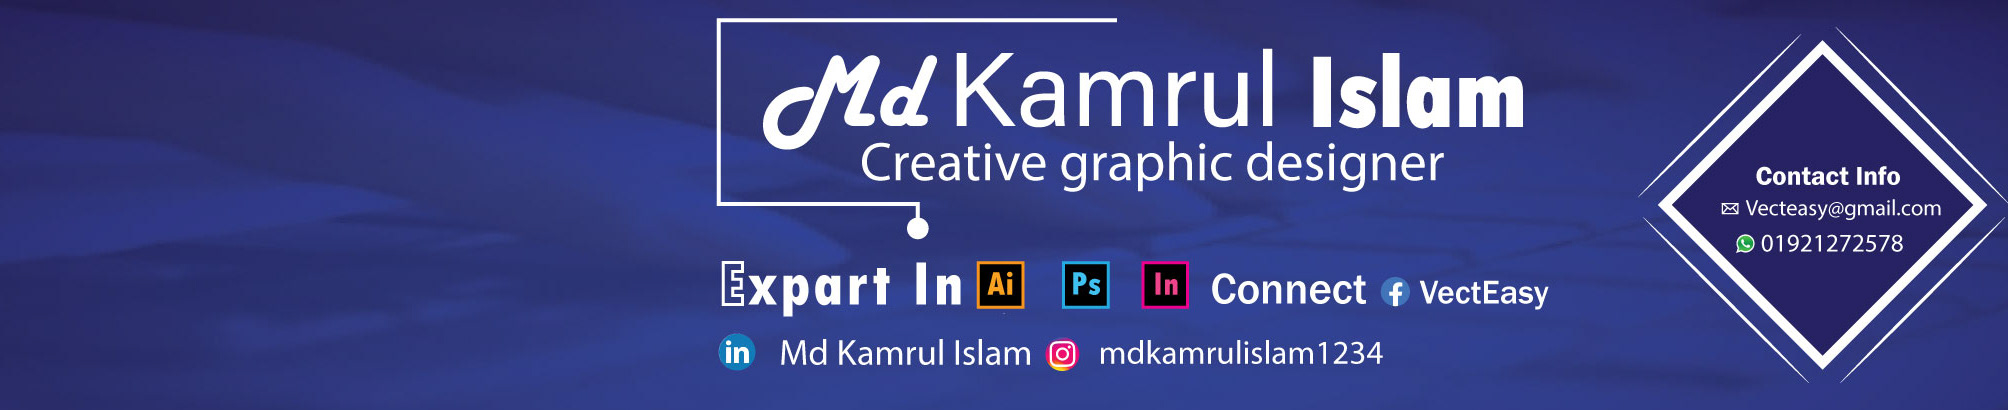 MD KAMRUL ISLAM profil başlığı